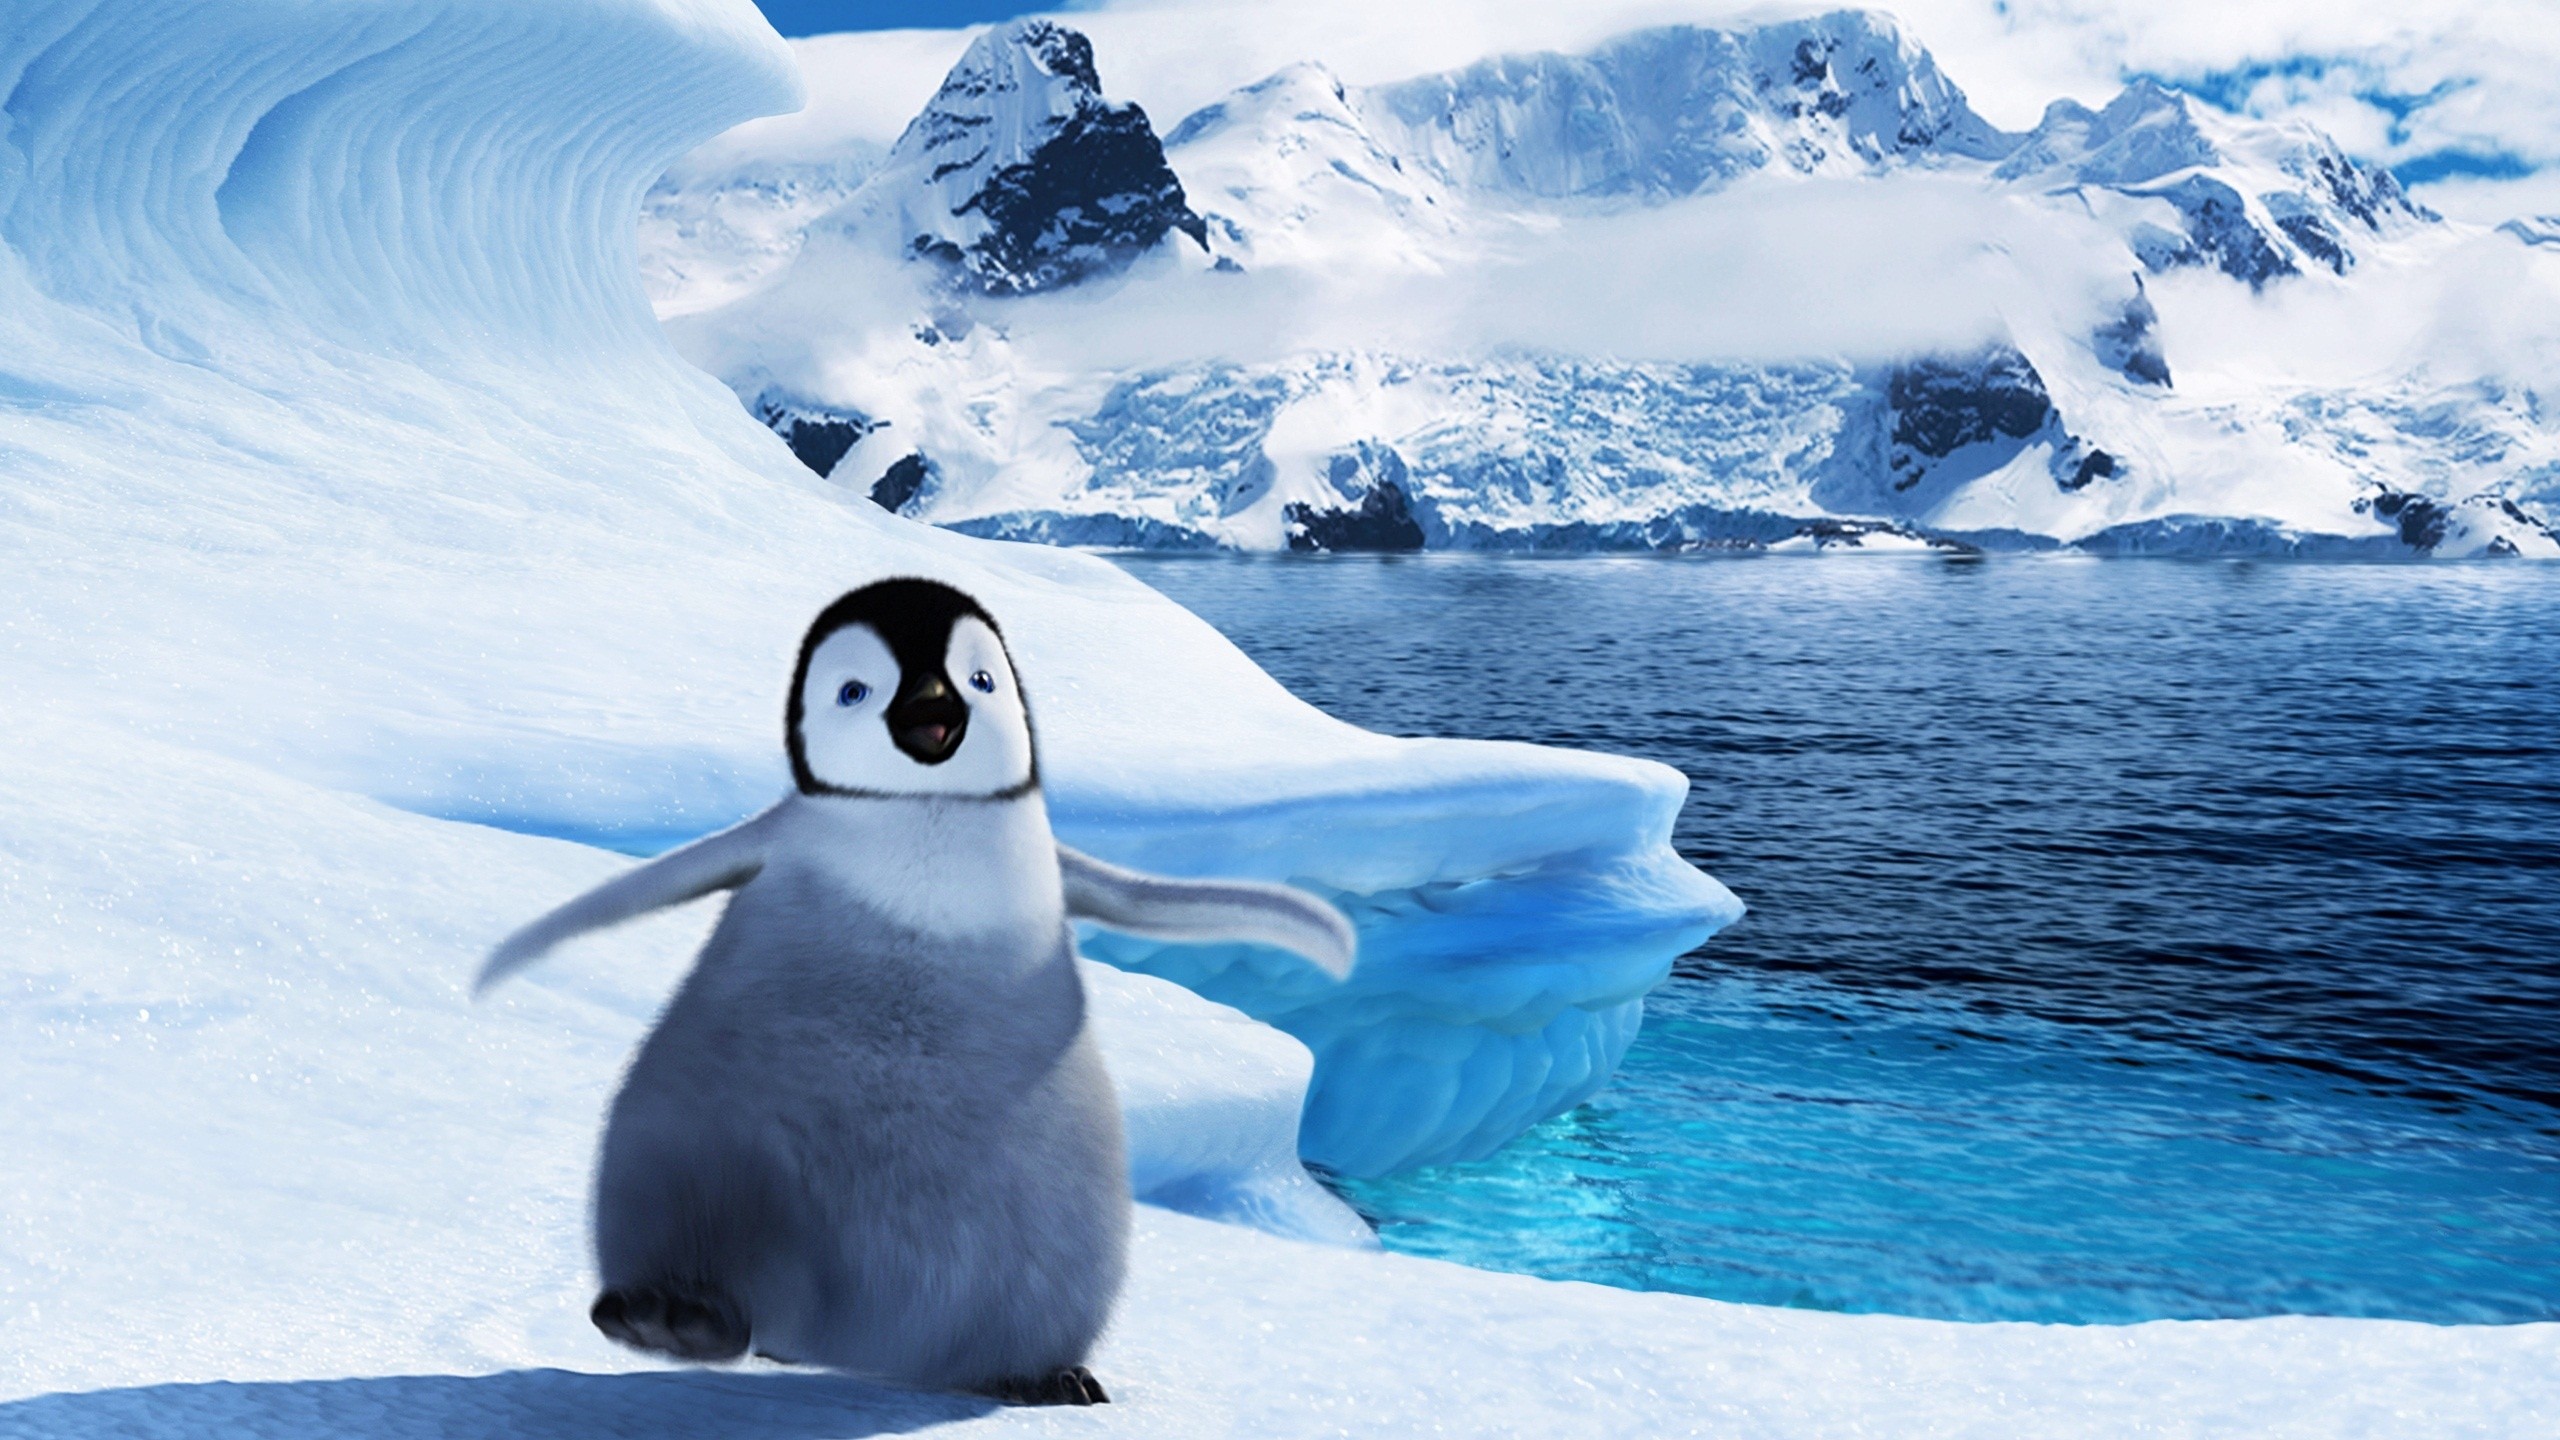 pingüino fondo de escritorio,ave no voladora,pingüino,pájaro,hielo,iceberg